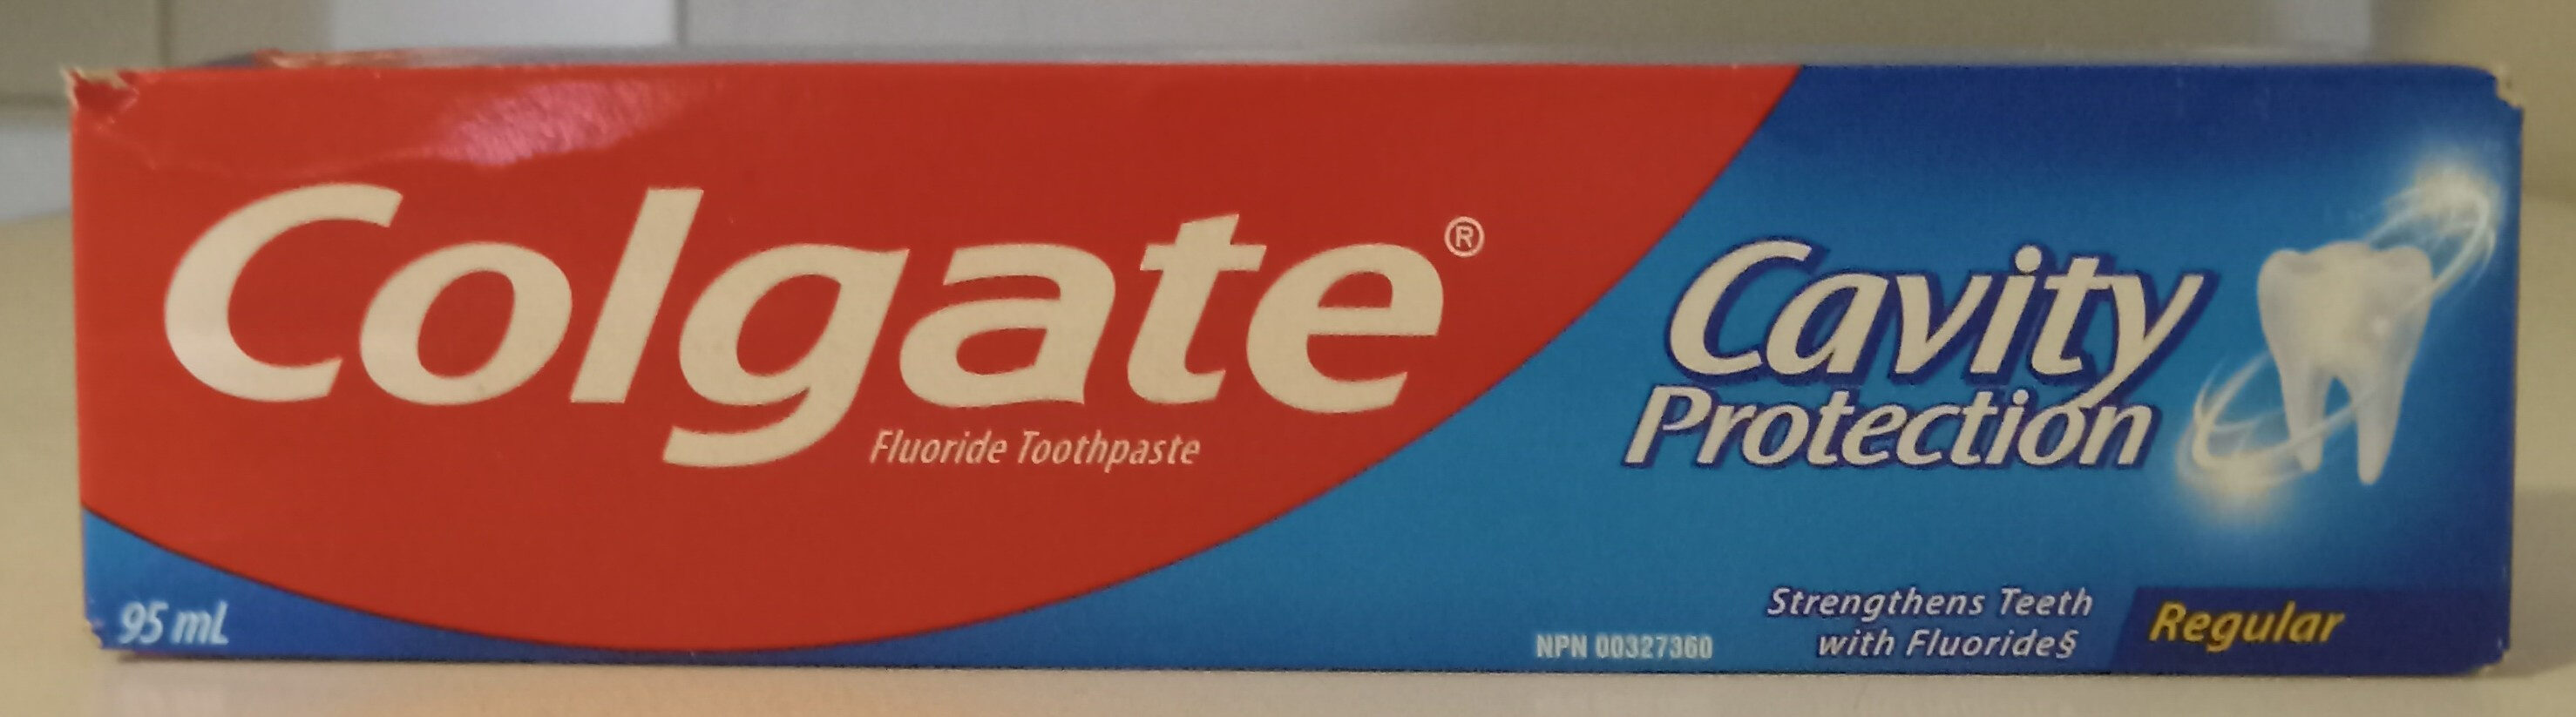 Regular Cavity Protection Flouride Toothpaste - 製品 - en